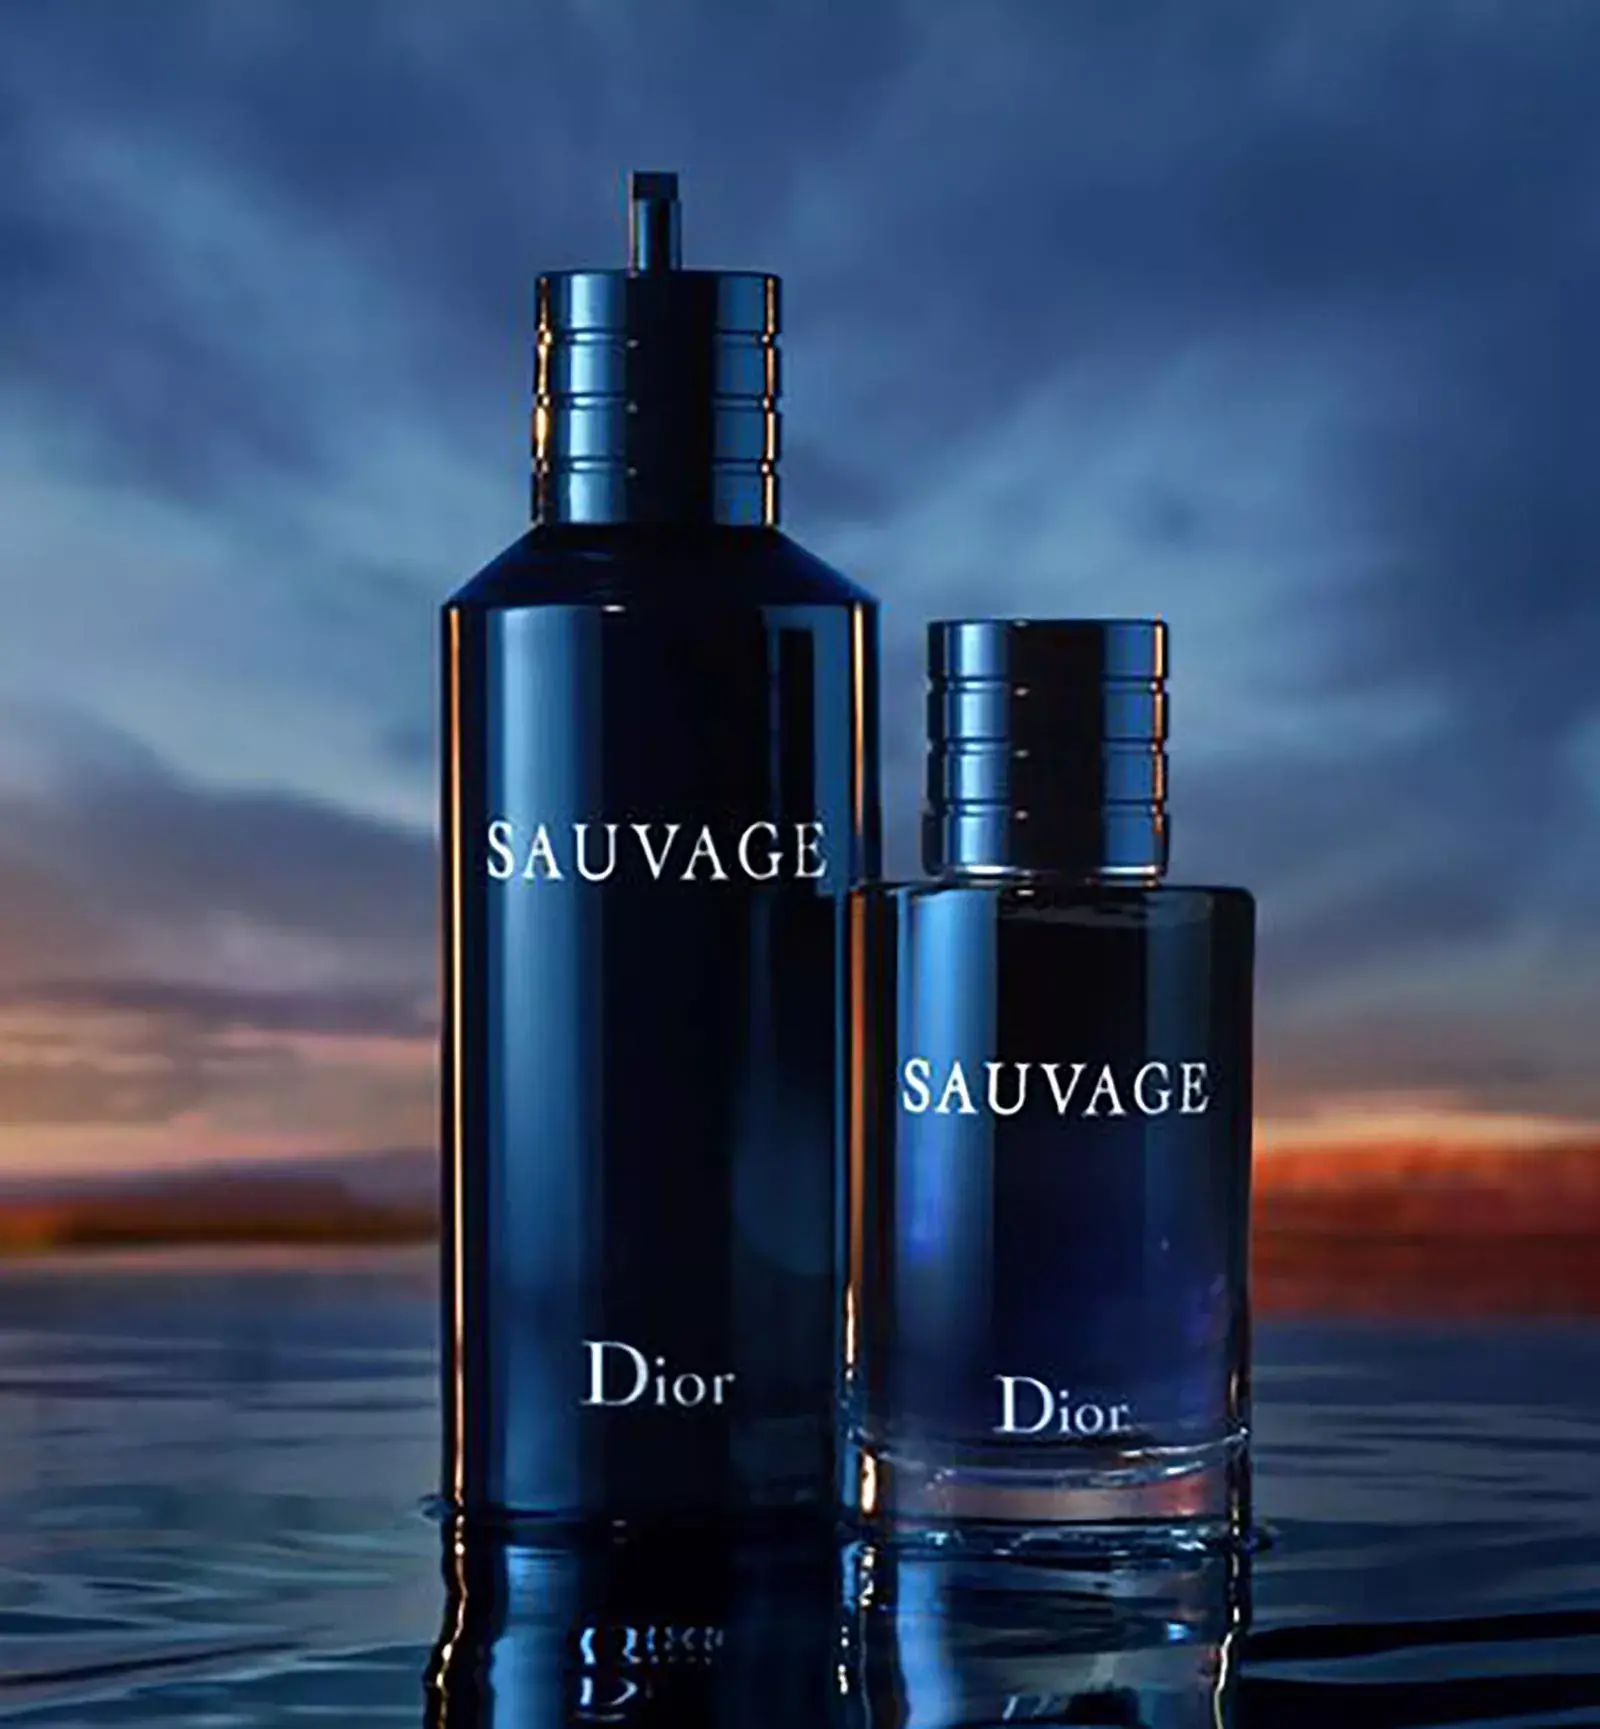 [case study] Media-image-Parfums-Christian-Dior